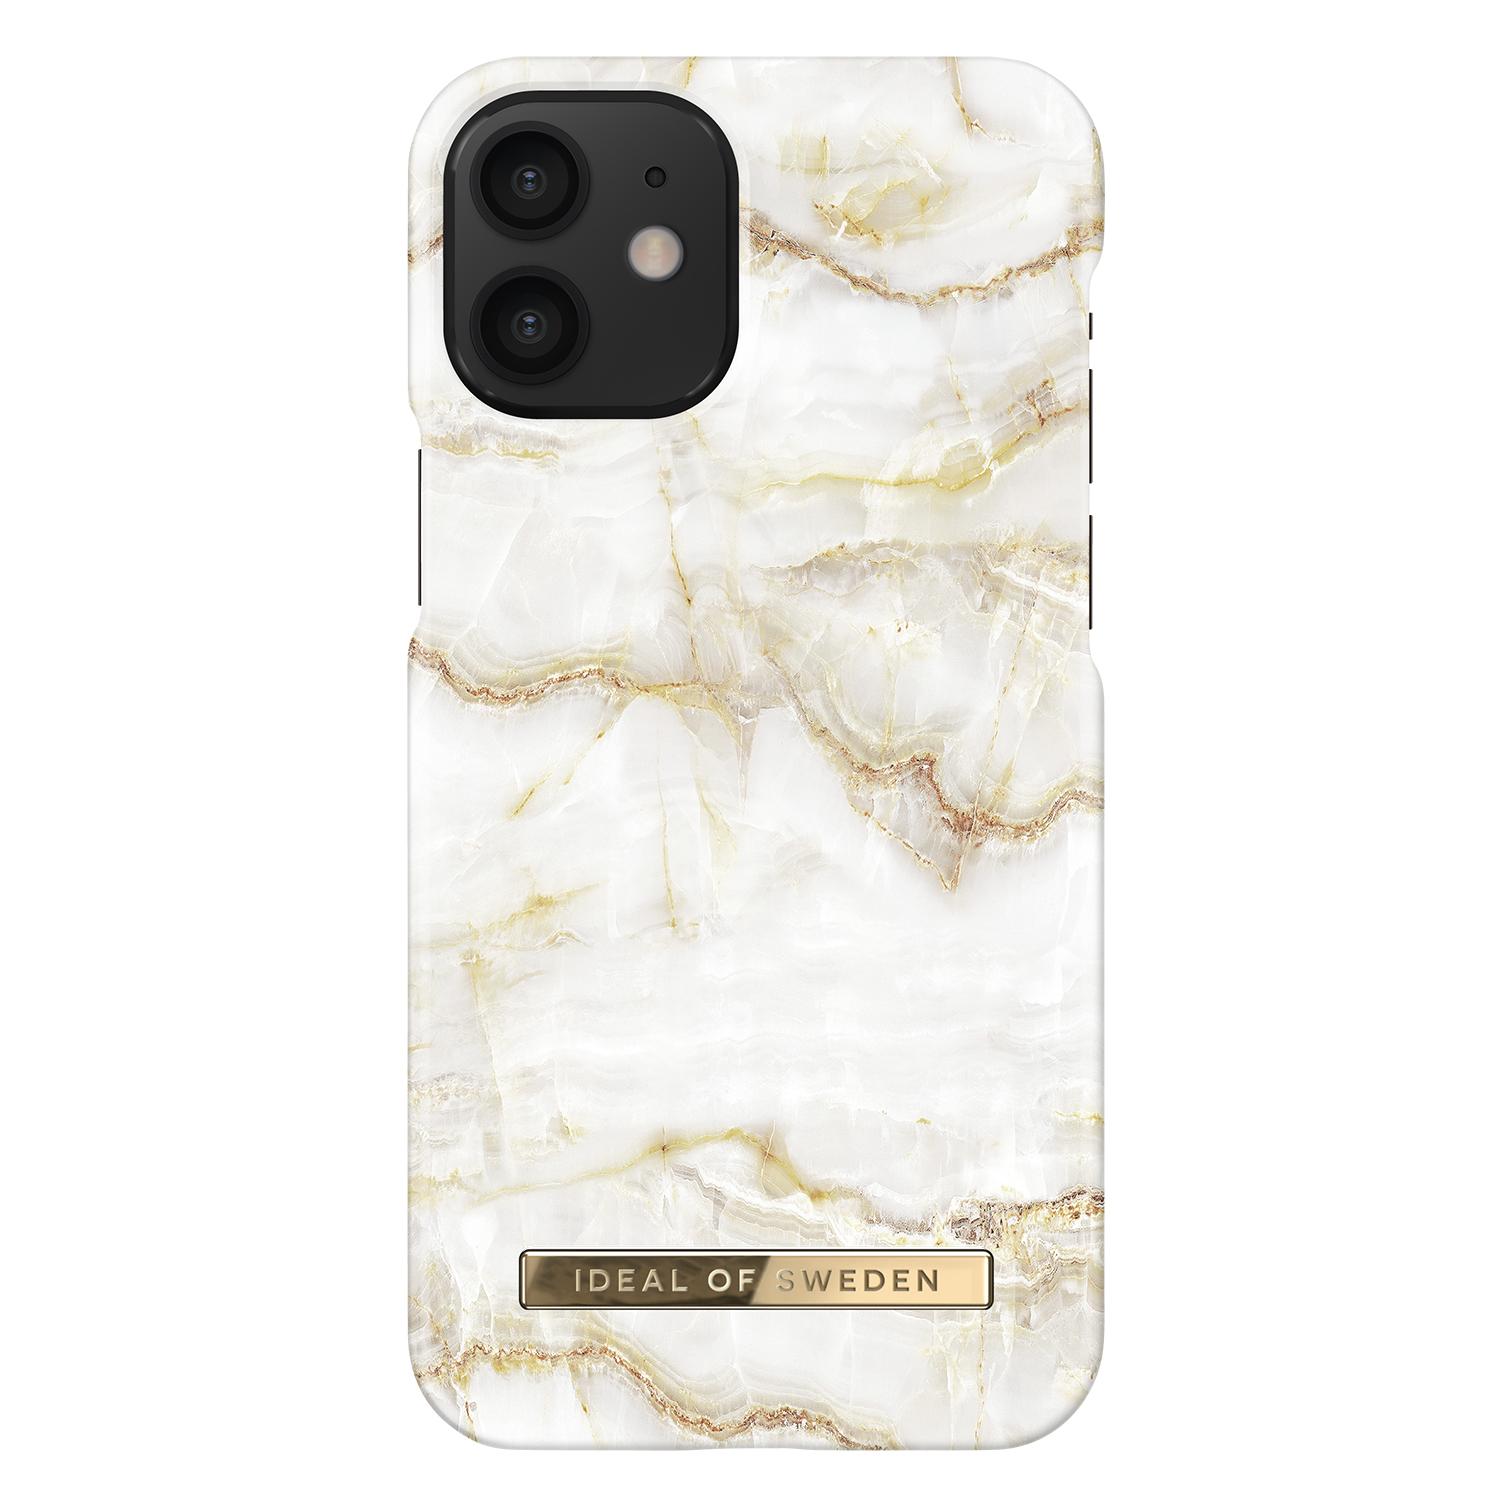 Coque Fashion Case iPhone 12 Mini Golden Pearl Marble